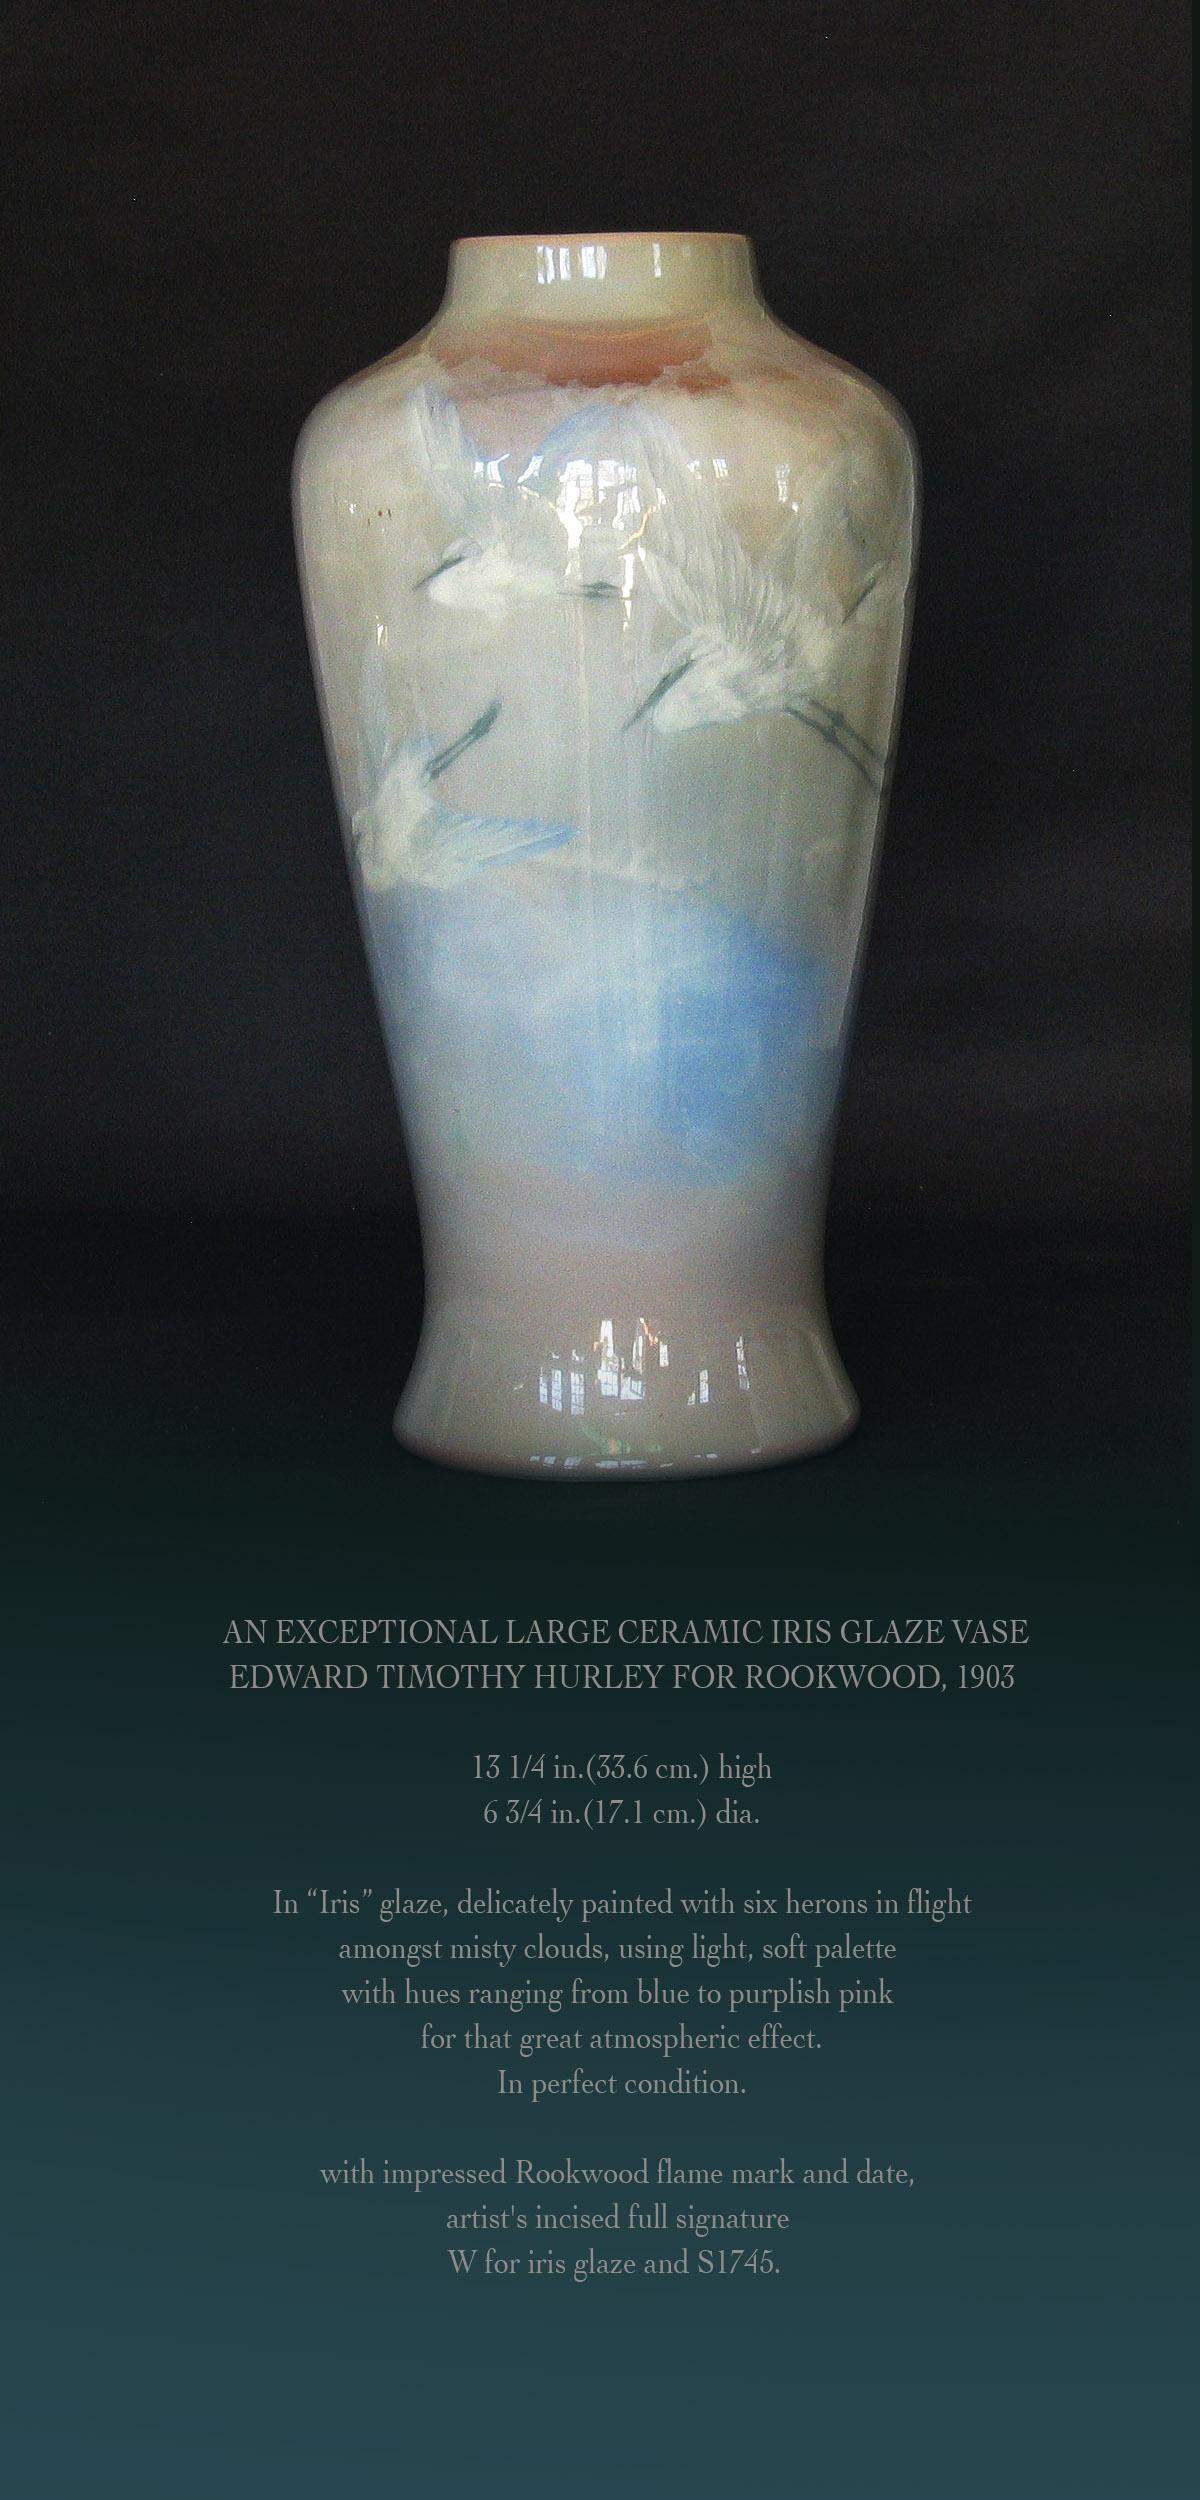 An Exceptional Large Ceramic Iris Glaze Vase
Edward Timothy Hurley For Rookwood, 1903.

Measures: 13 1/4